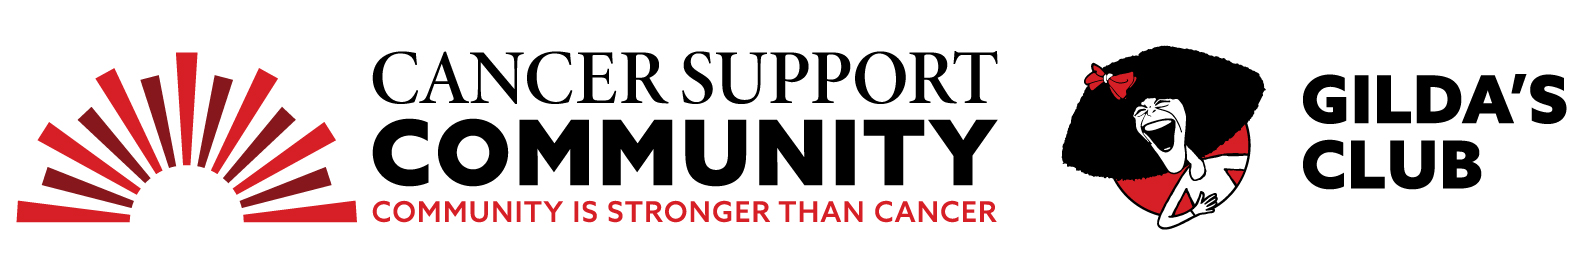 Cancer-Support-Community-logo